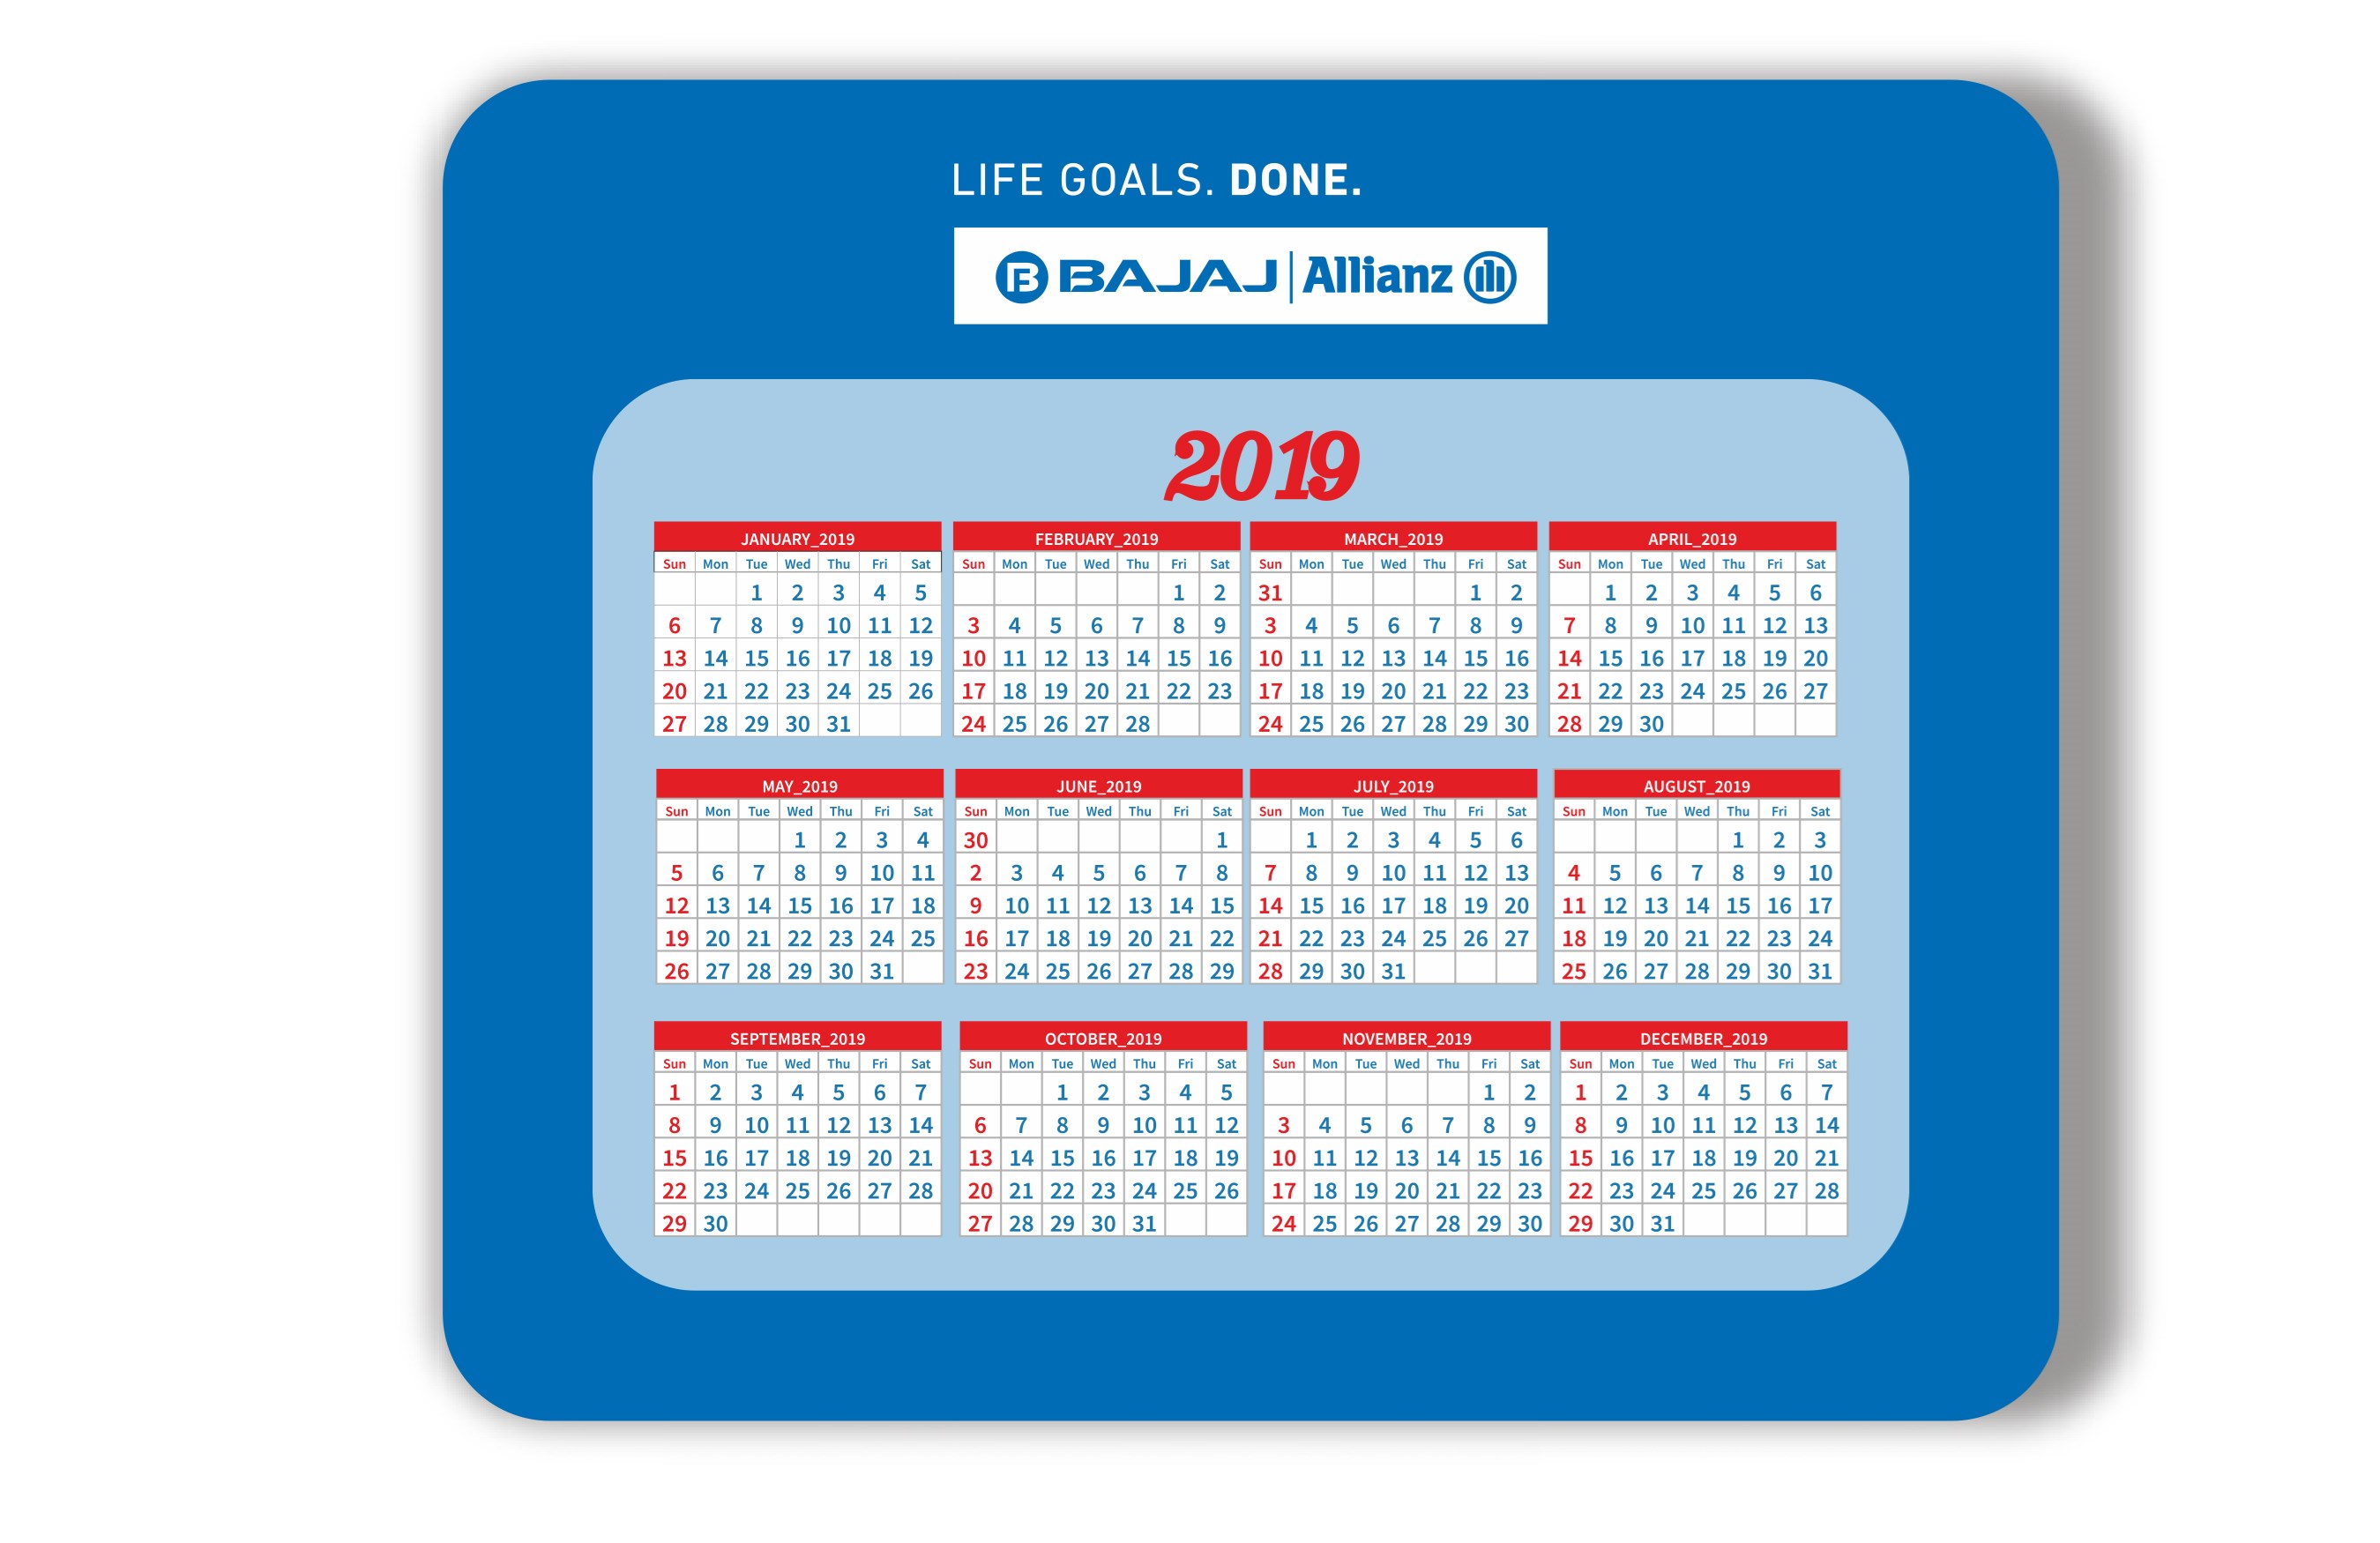 Calendar Mouse Pad